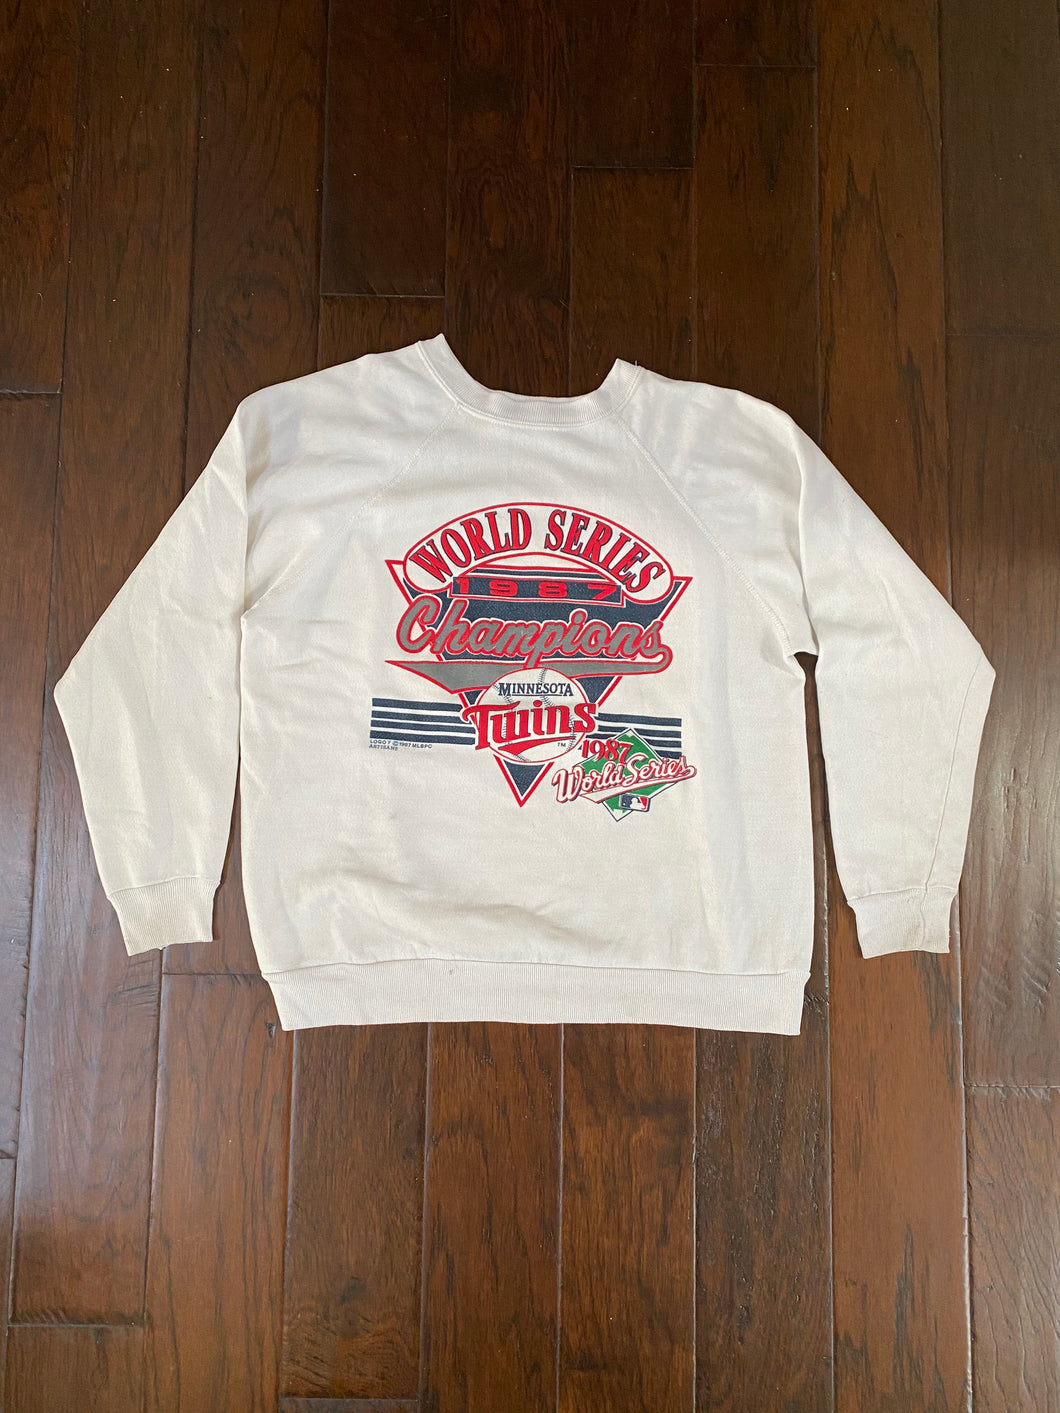 Minnesota Twins “1987 World Series Champions” Vintage Distressed Sweatshirt